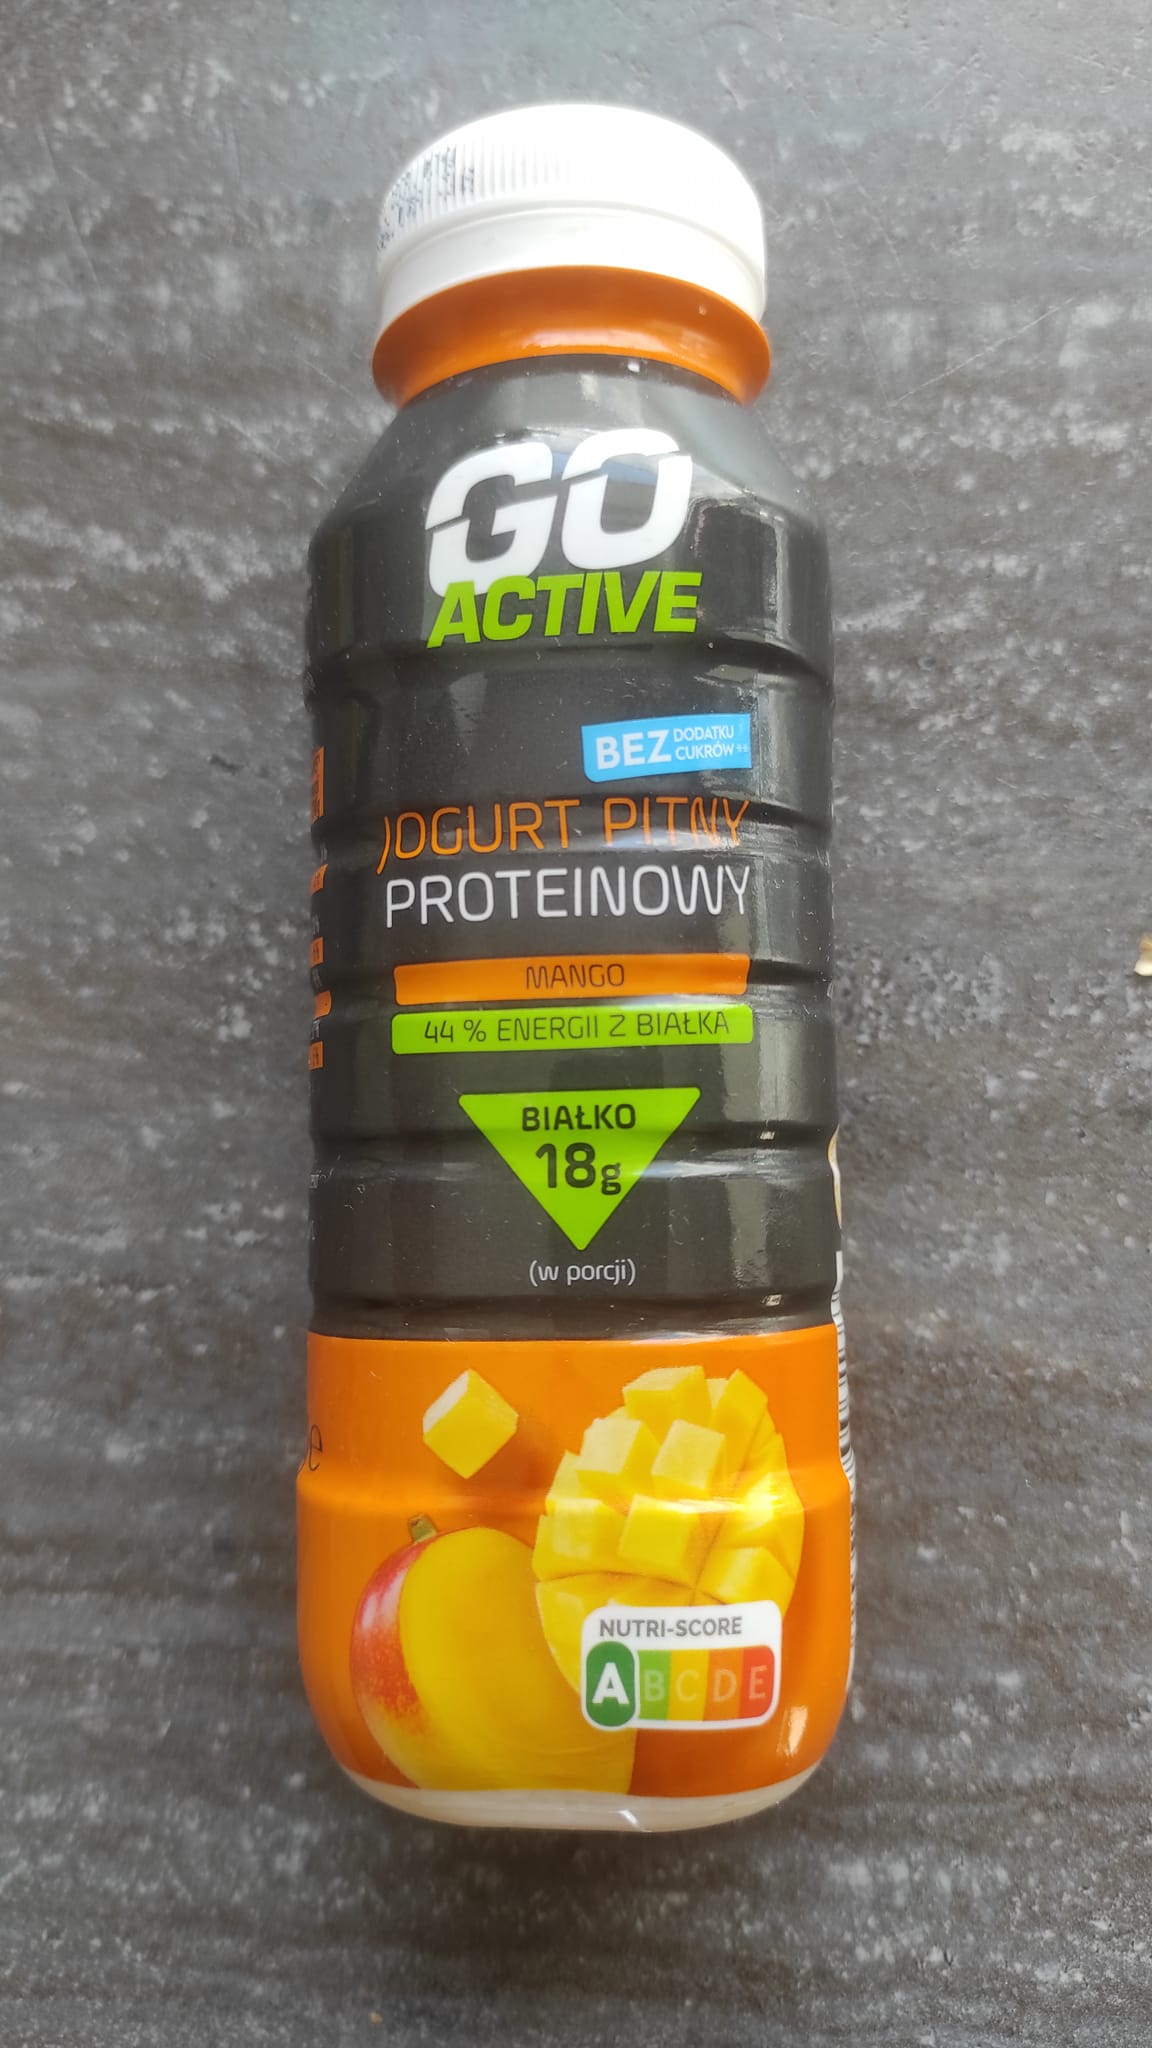 Jogurt pitny proteinowy mango – Go Active 5 (1)